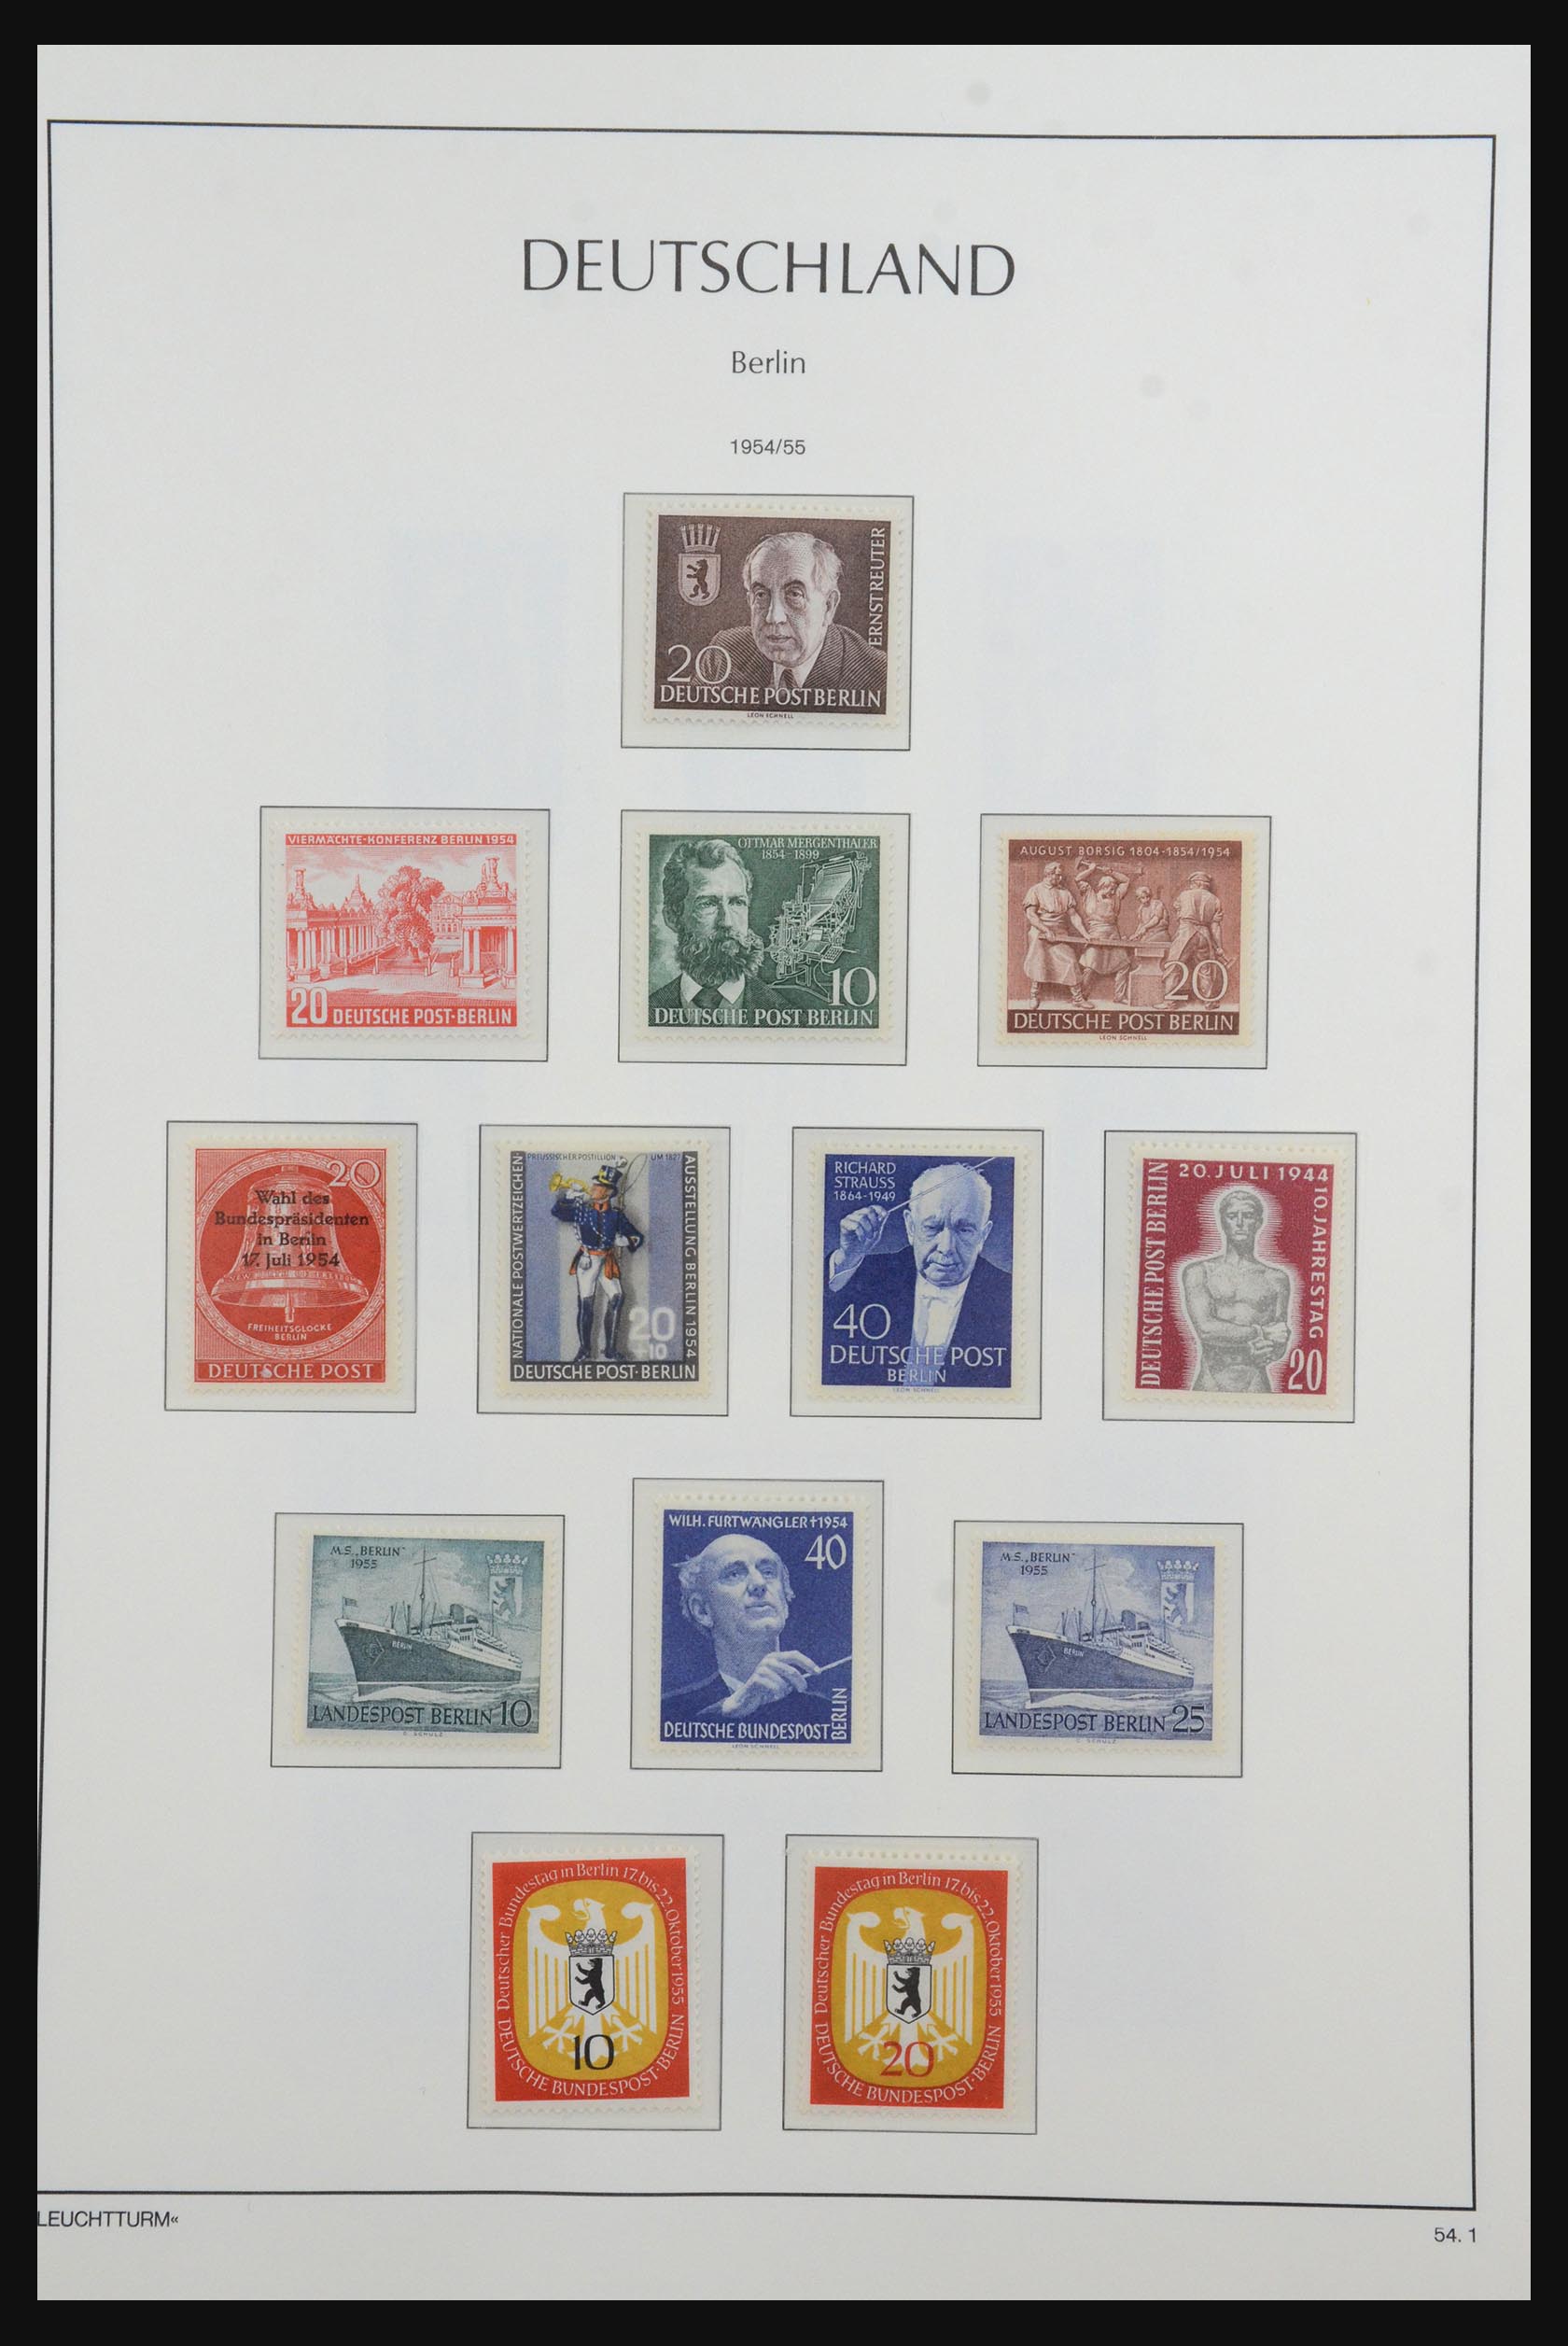 31601 010 - 31601 Bundespost, Berlin and Saar 1948-2008.